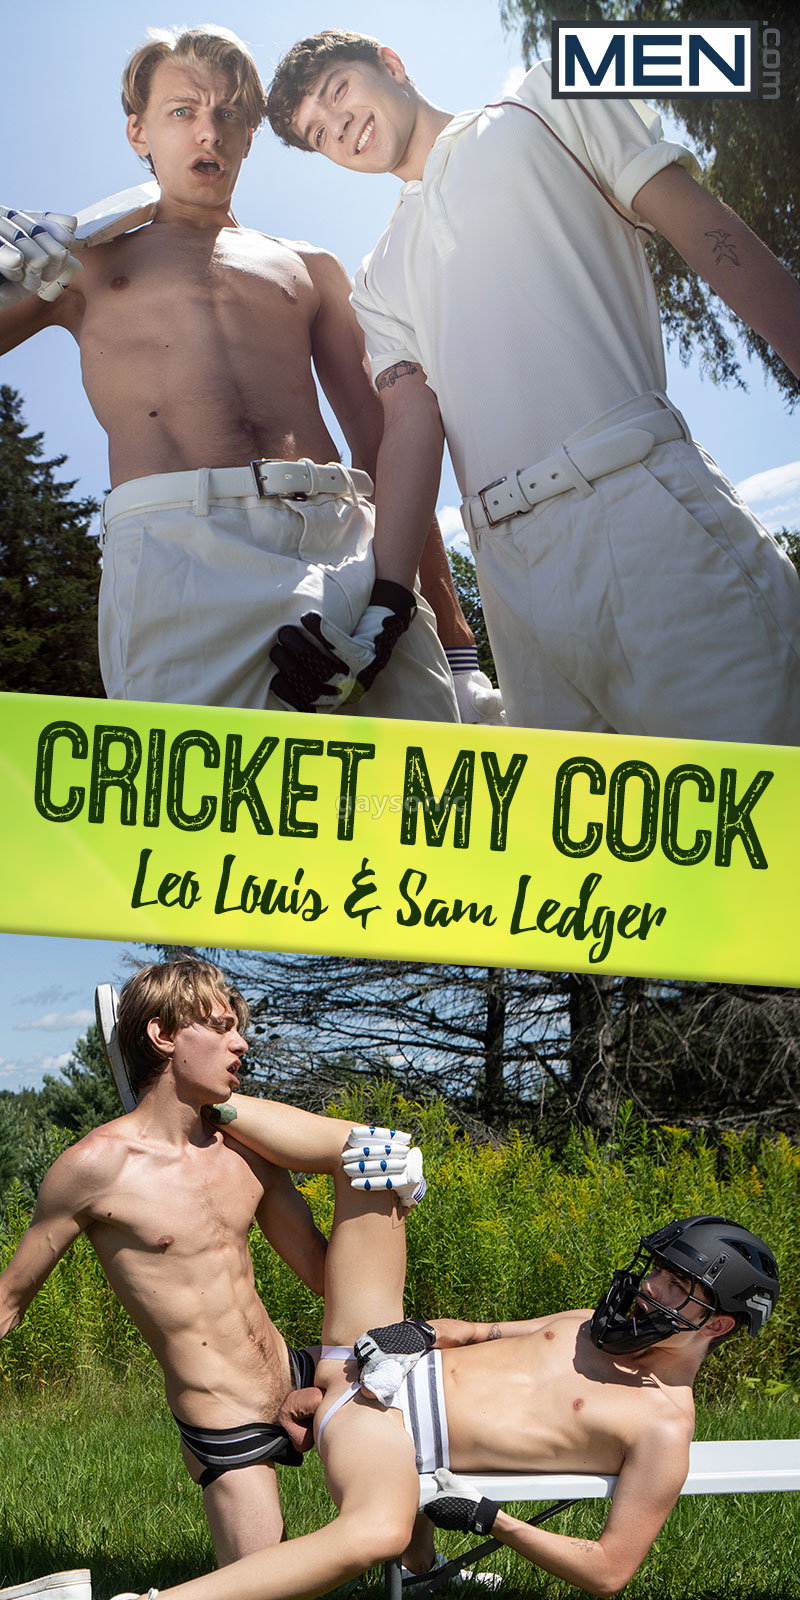 MEN - Leo Louis, Sam Ledger - Cricket My Cock